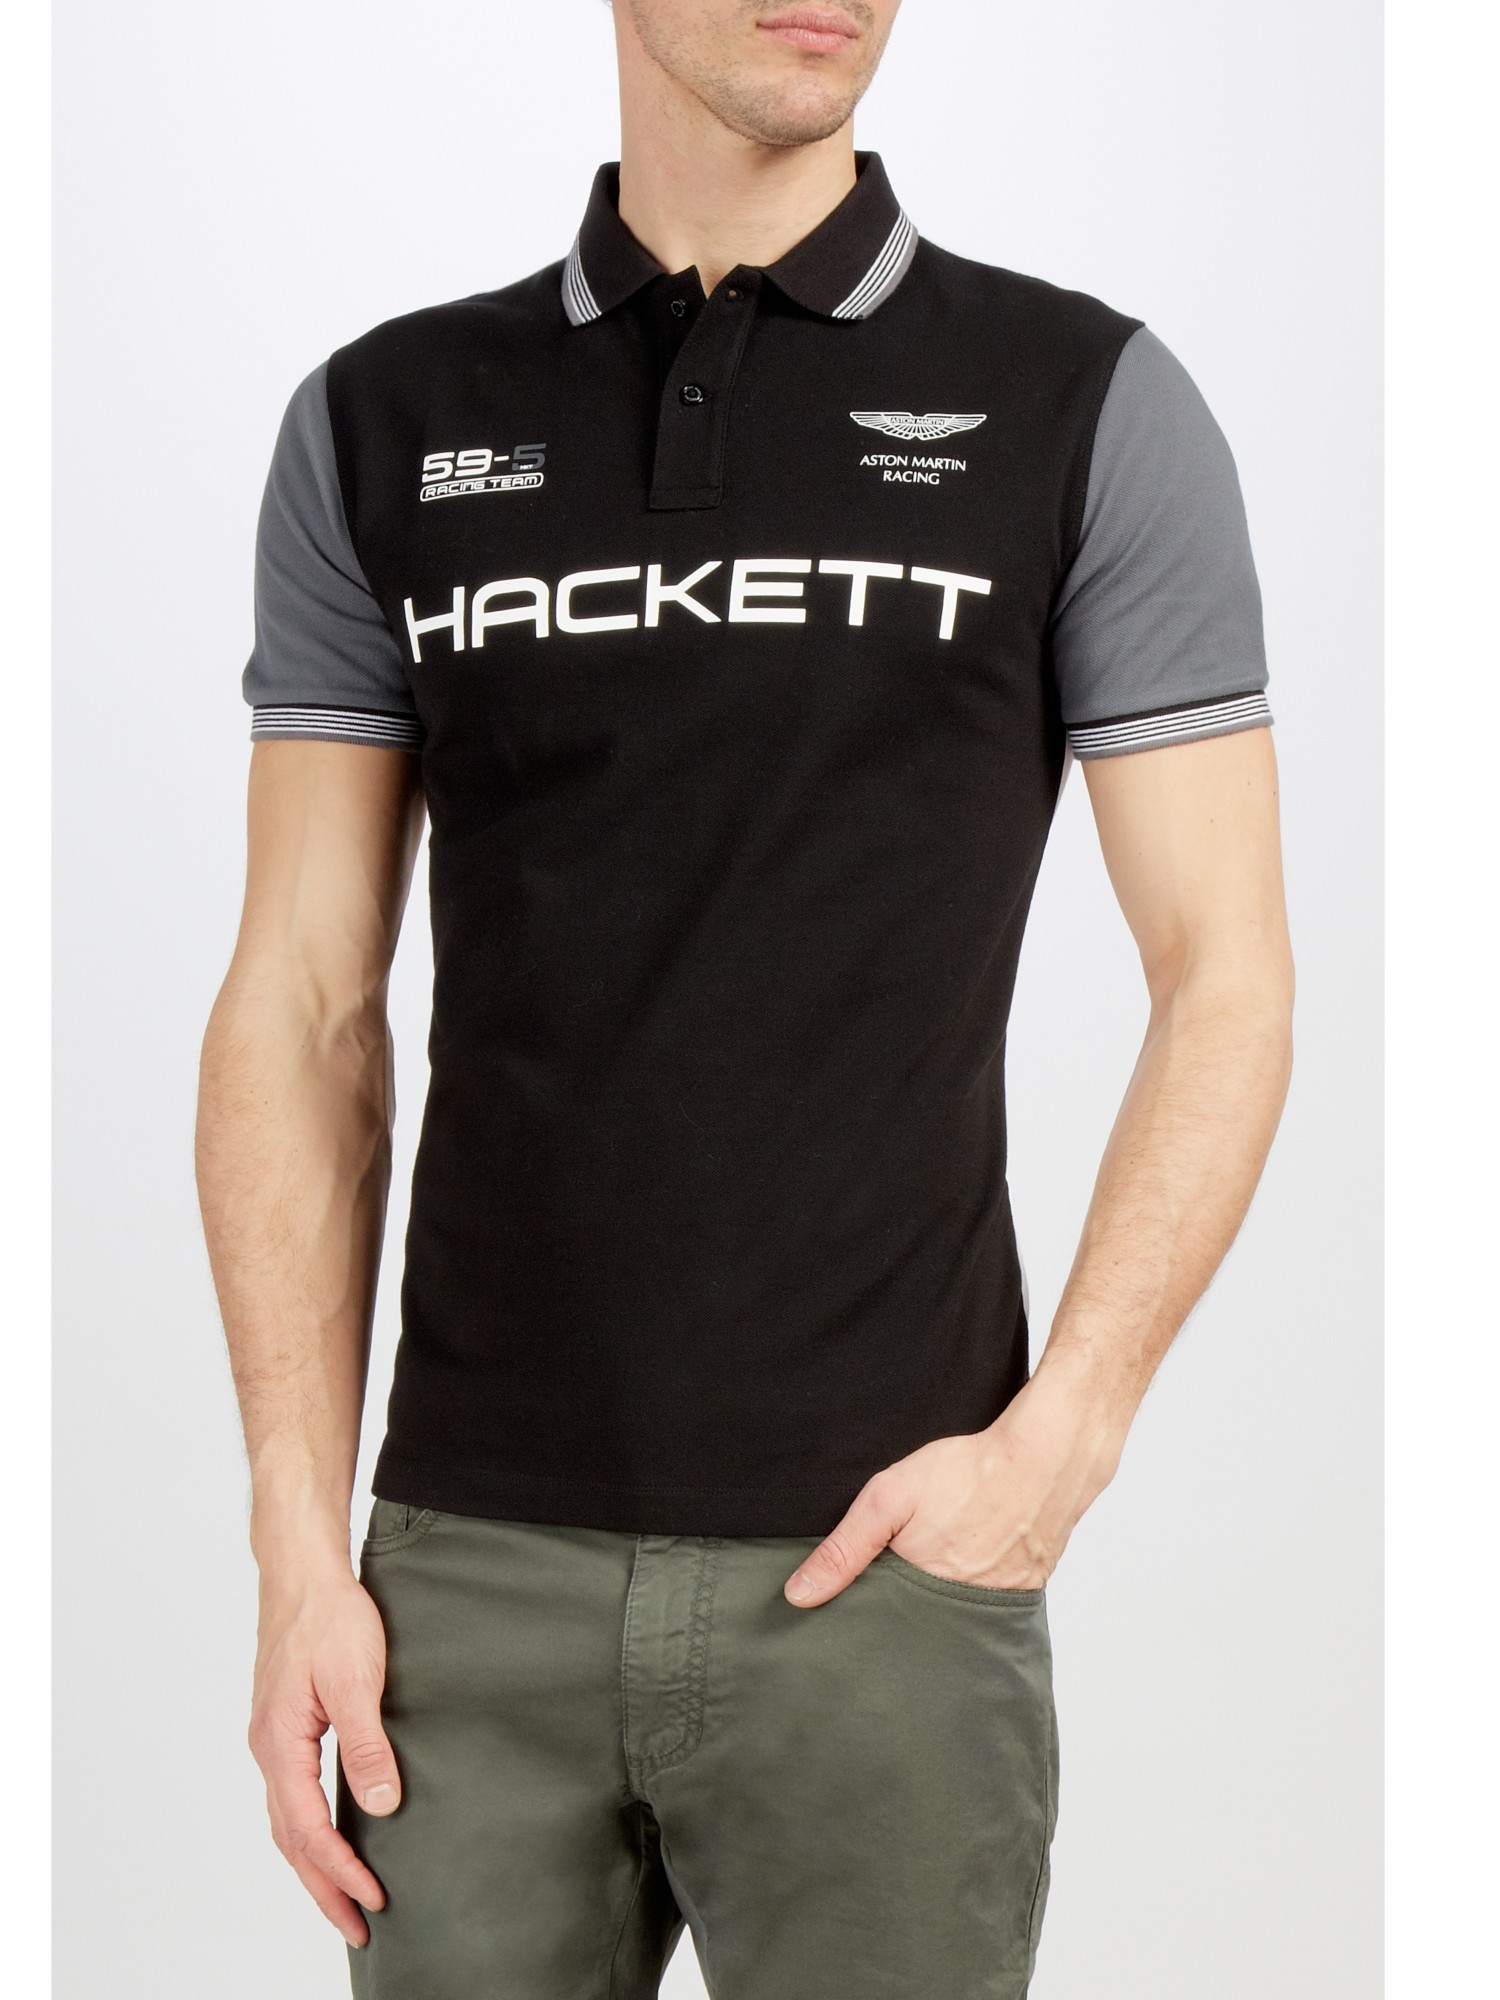 Hackett Aston Martin Racing Polo Shirt in Black for Men - Lyst